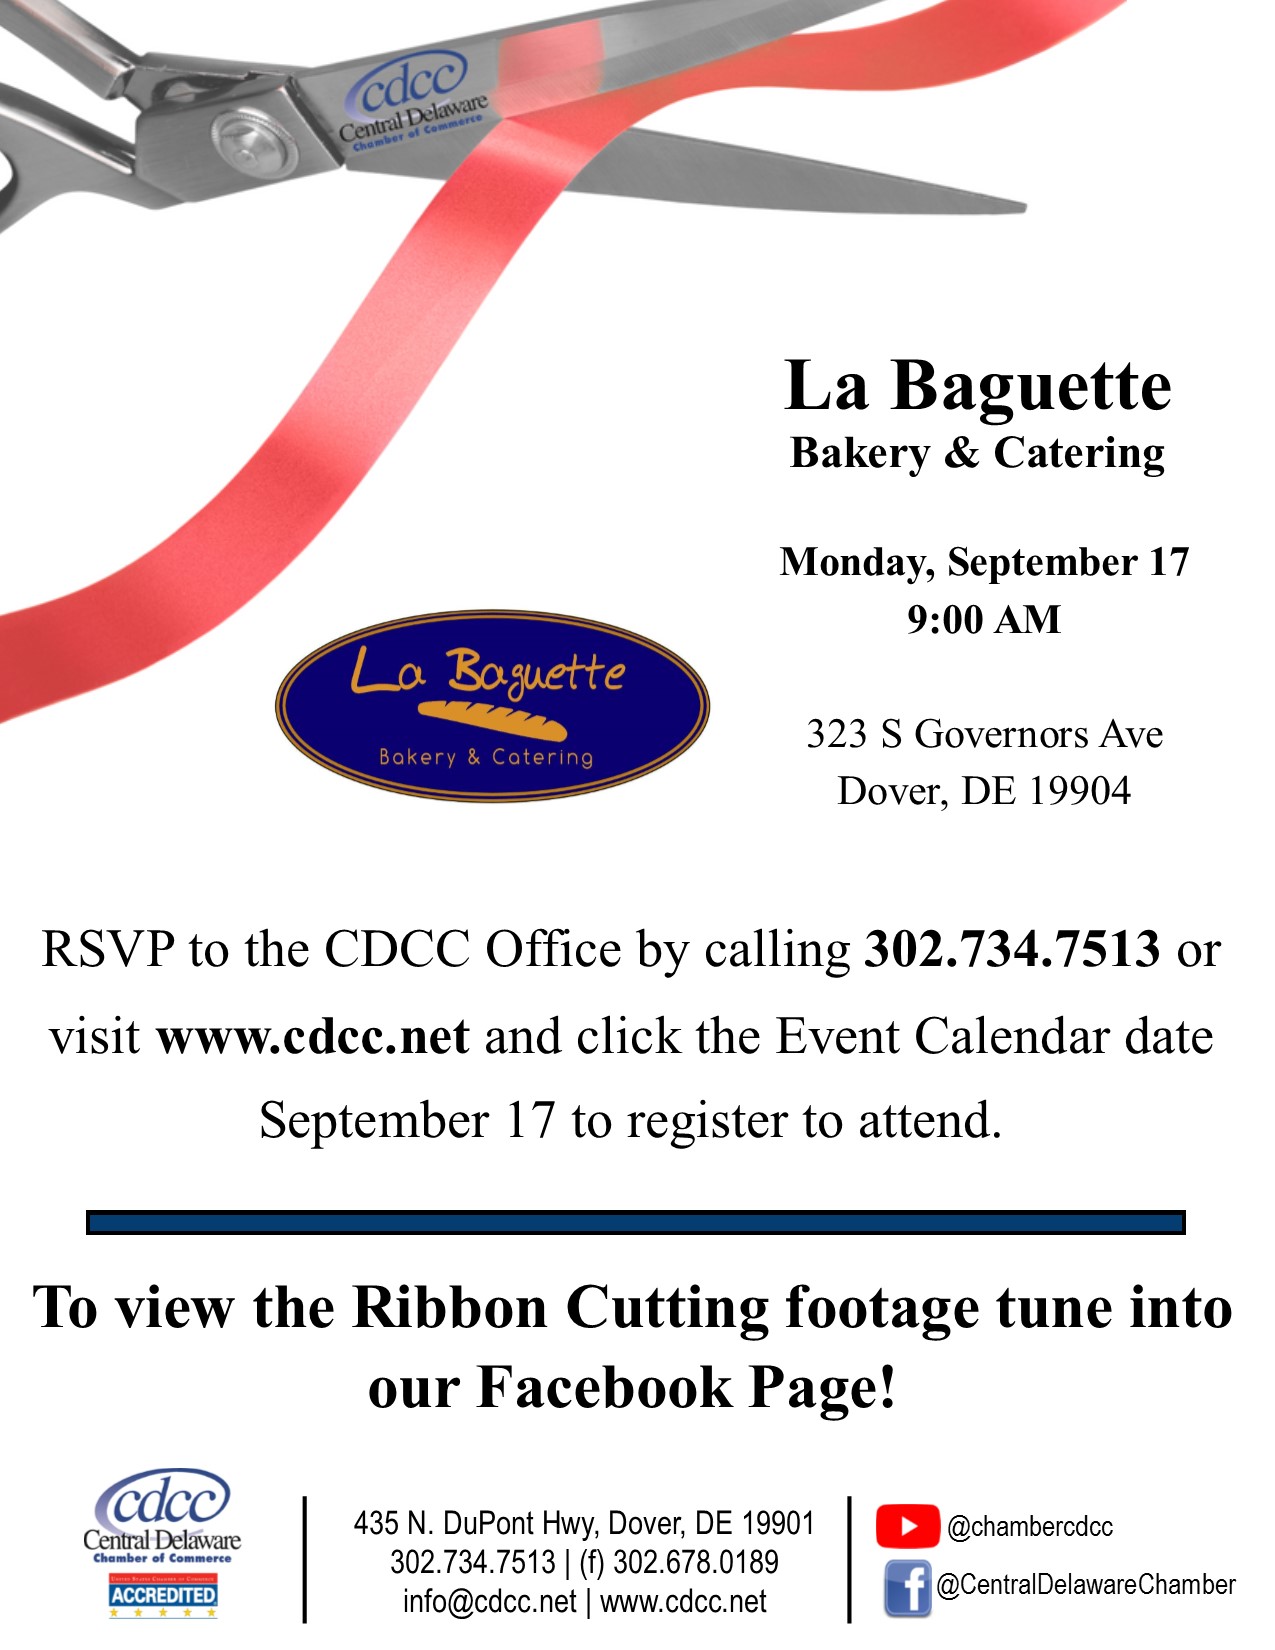 Ribbon Cutting - La Baguette Bakery & Catering